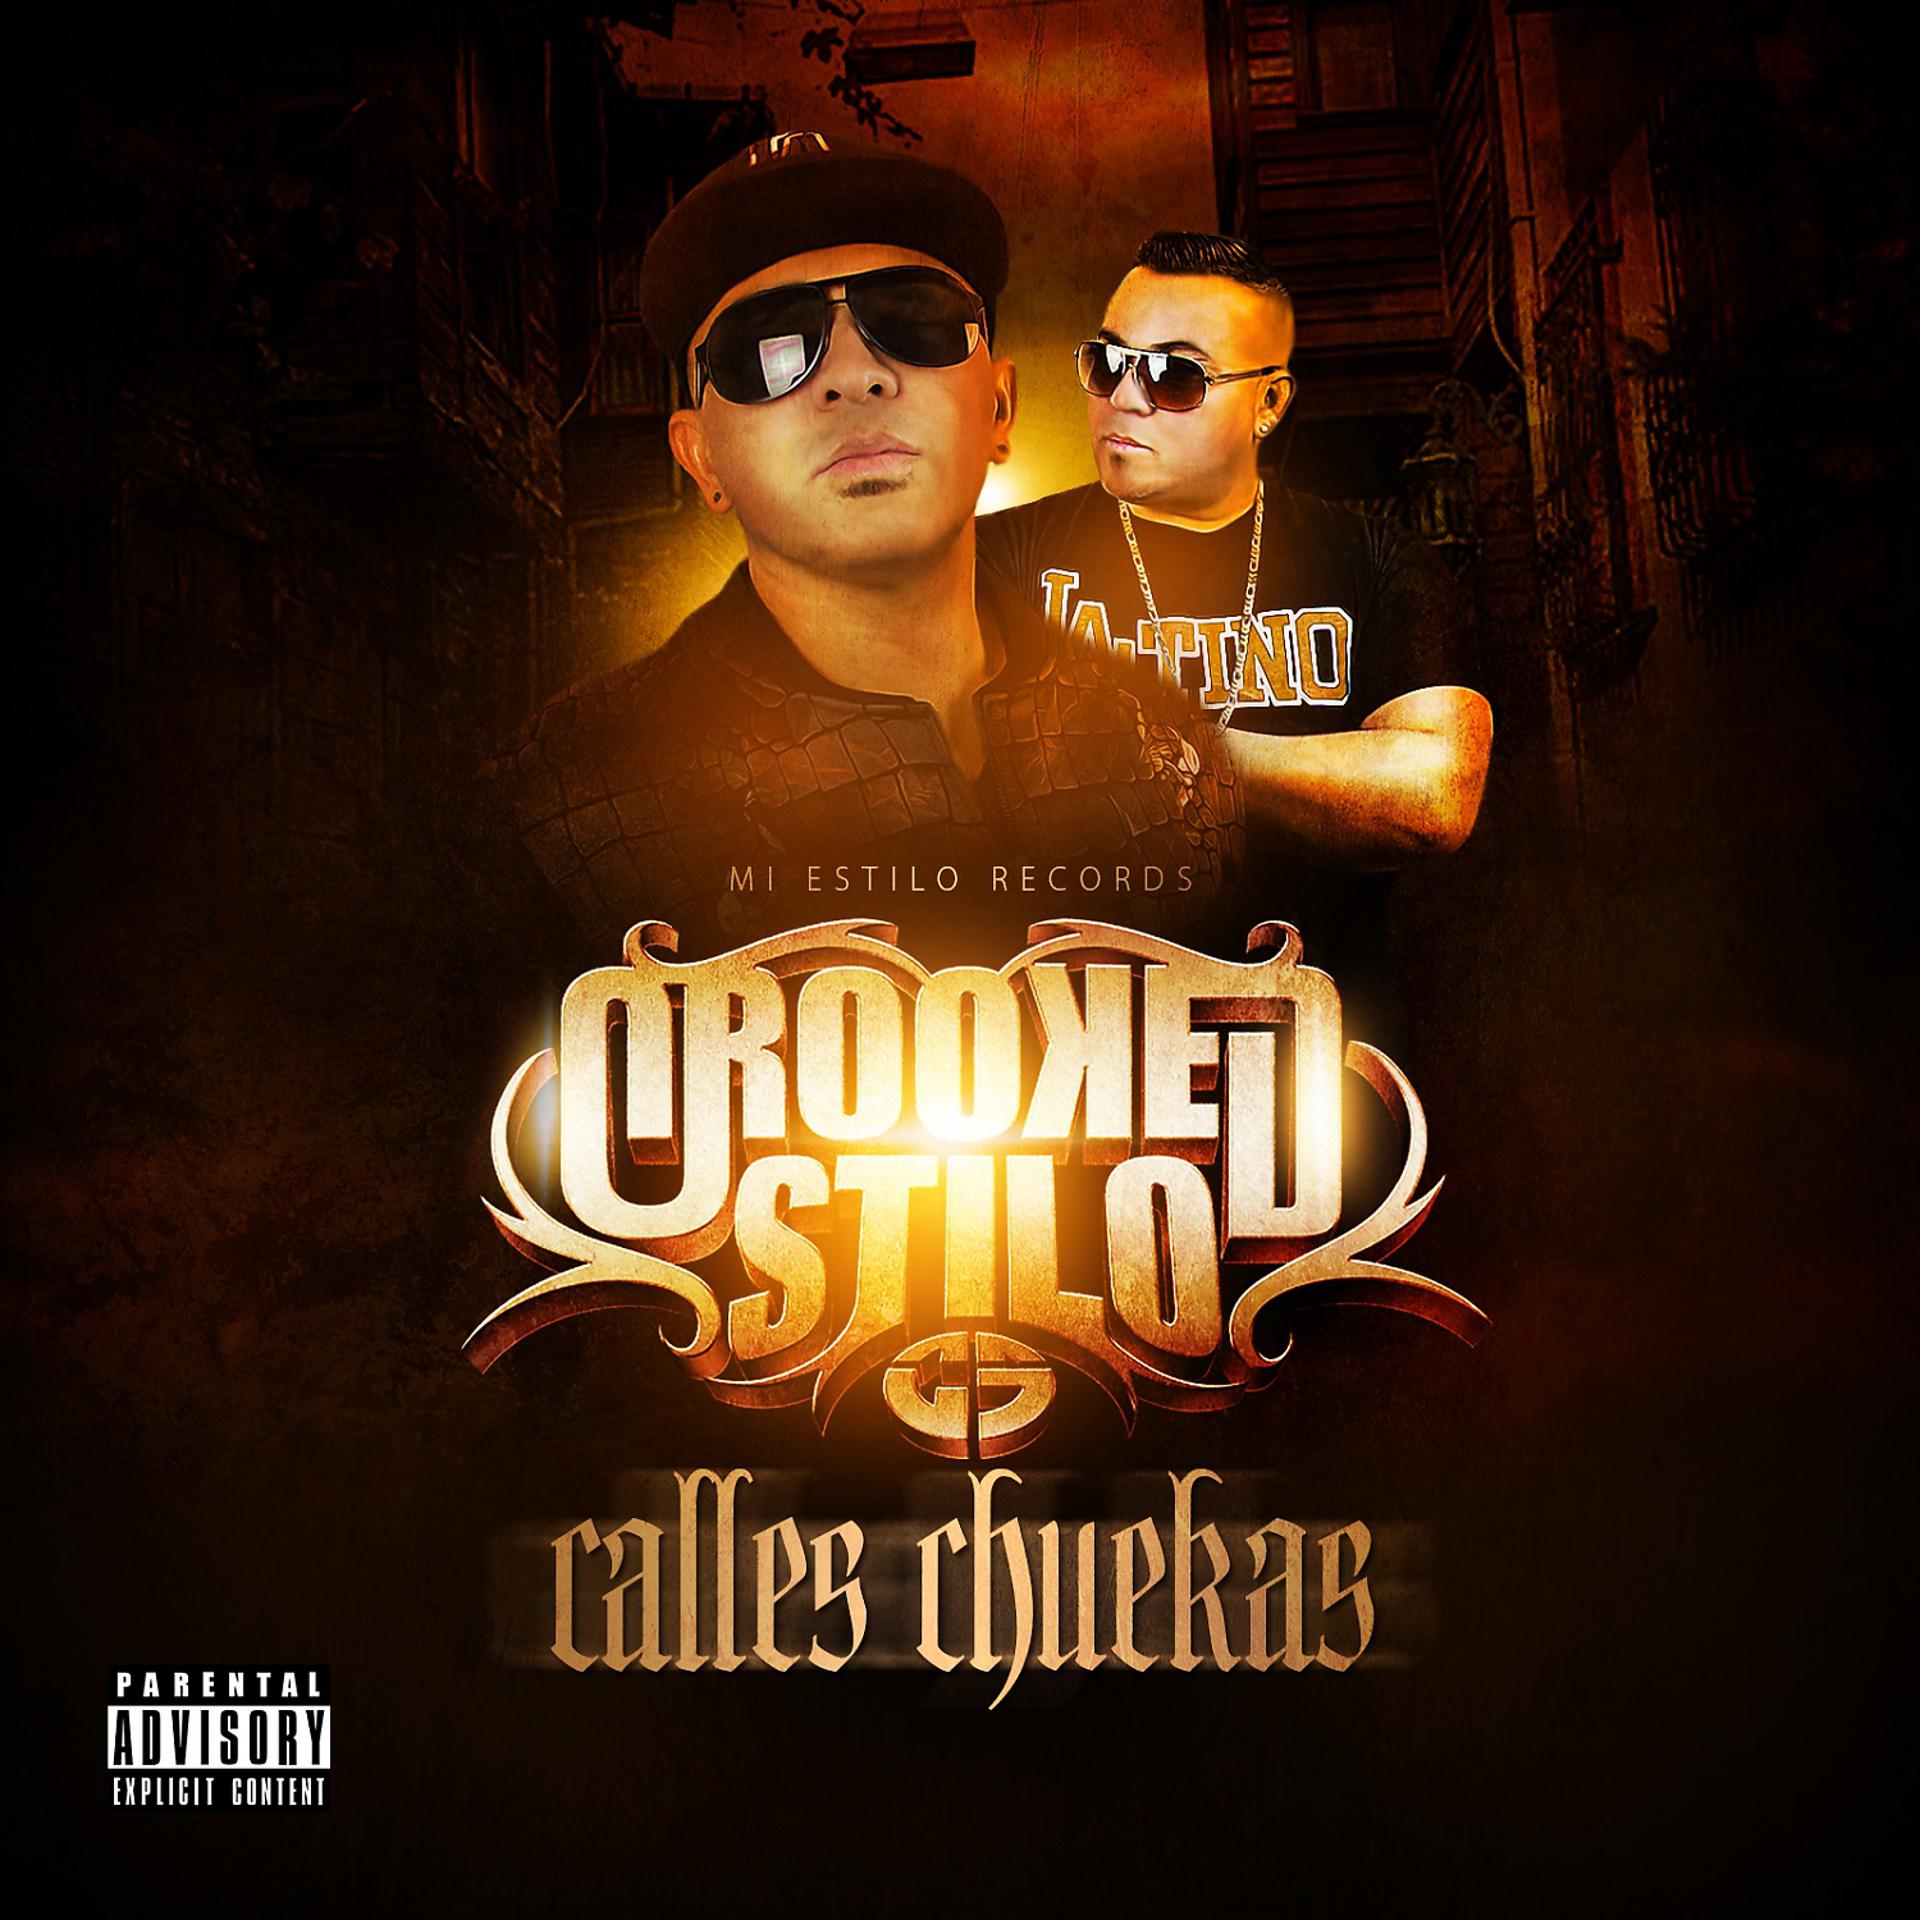 Постер альбома Calles Chuekas